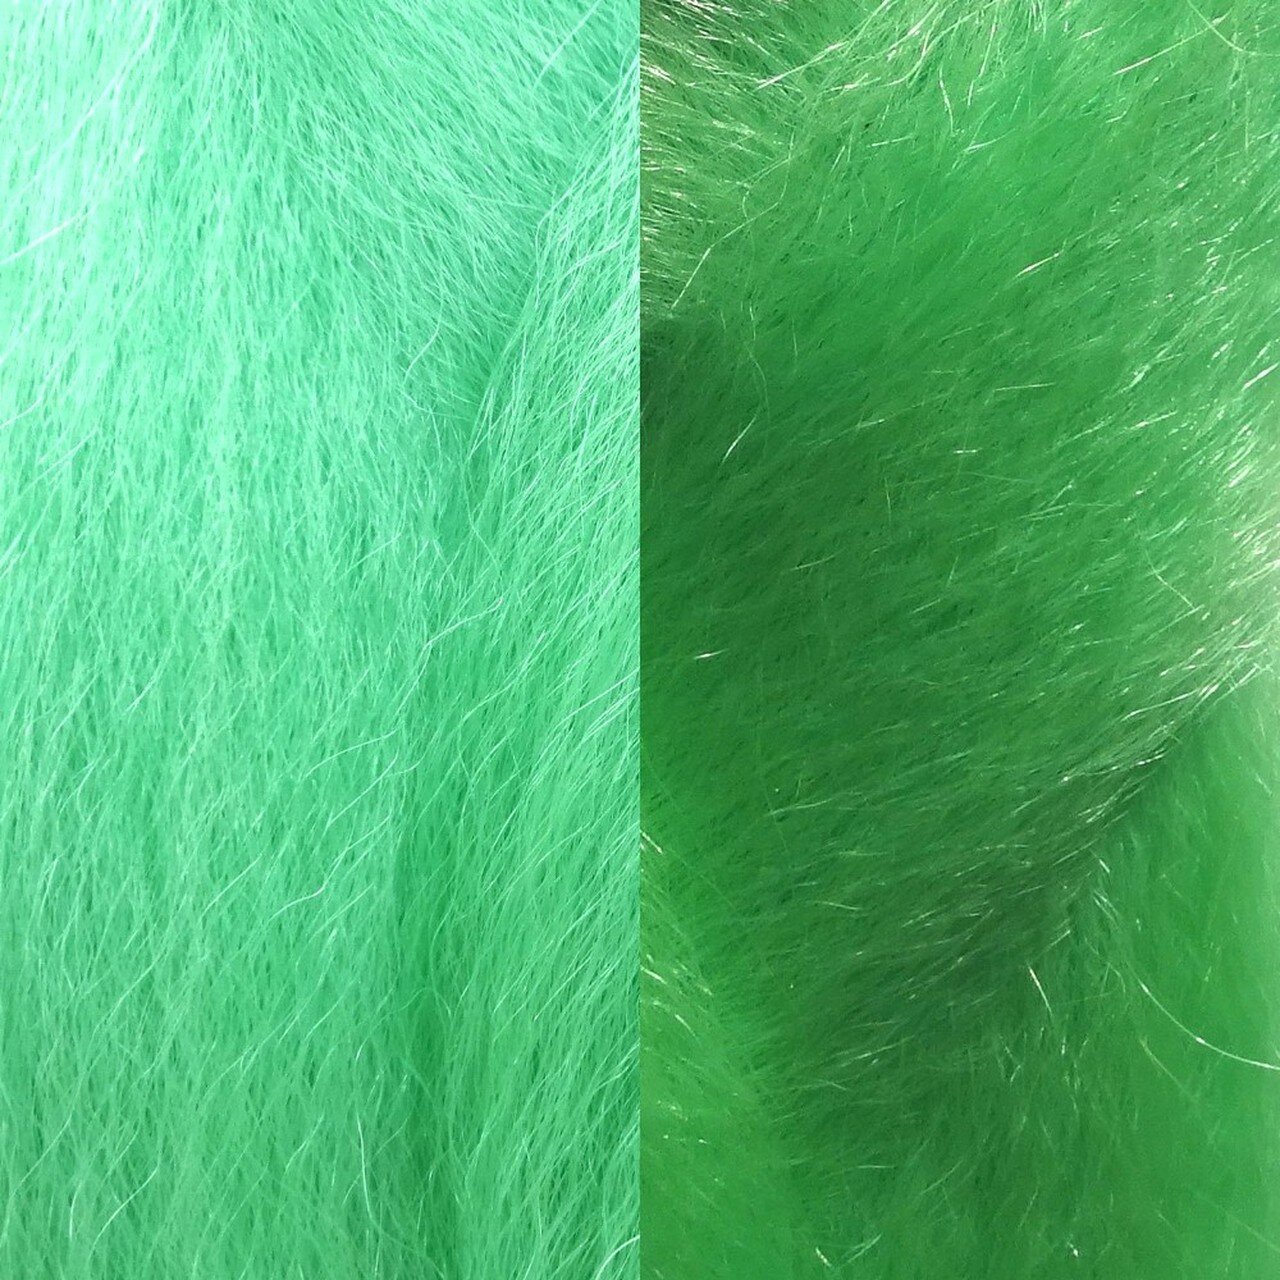 48 Color Changing Mood Braiding Hair by RastAfri – Waba Hair and Beauty  Supply